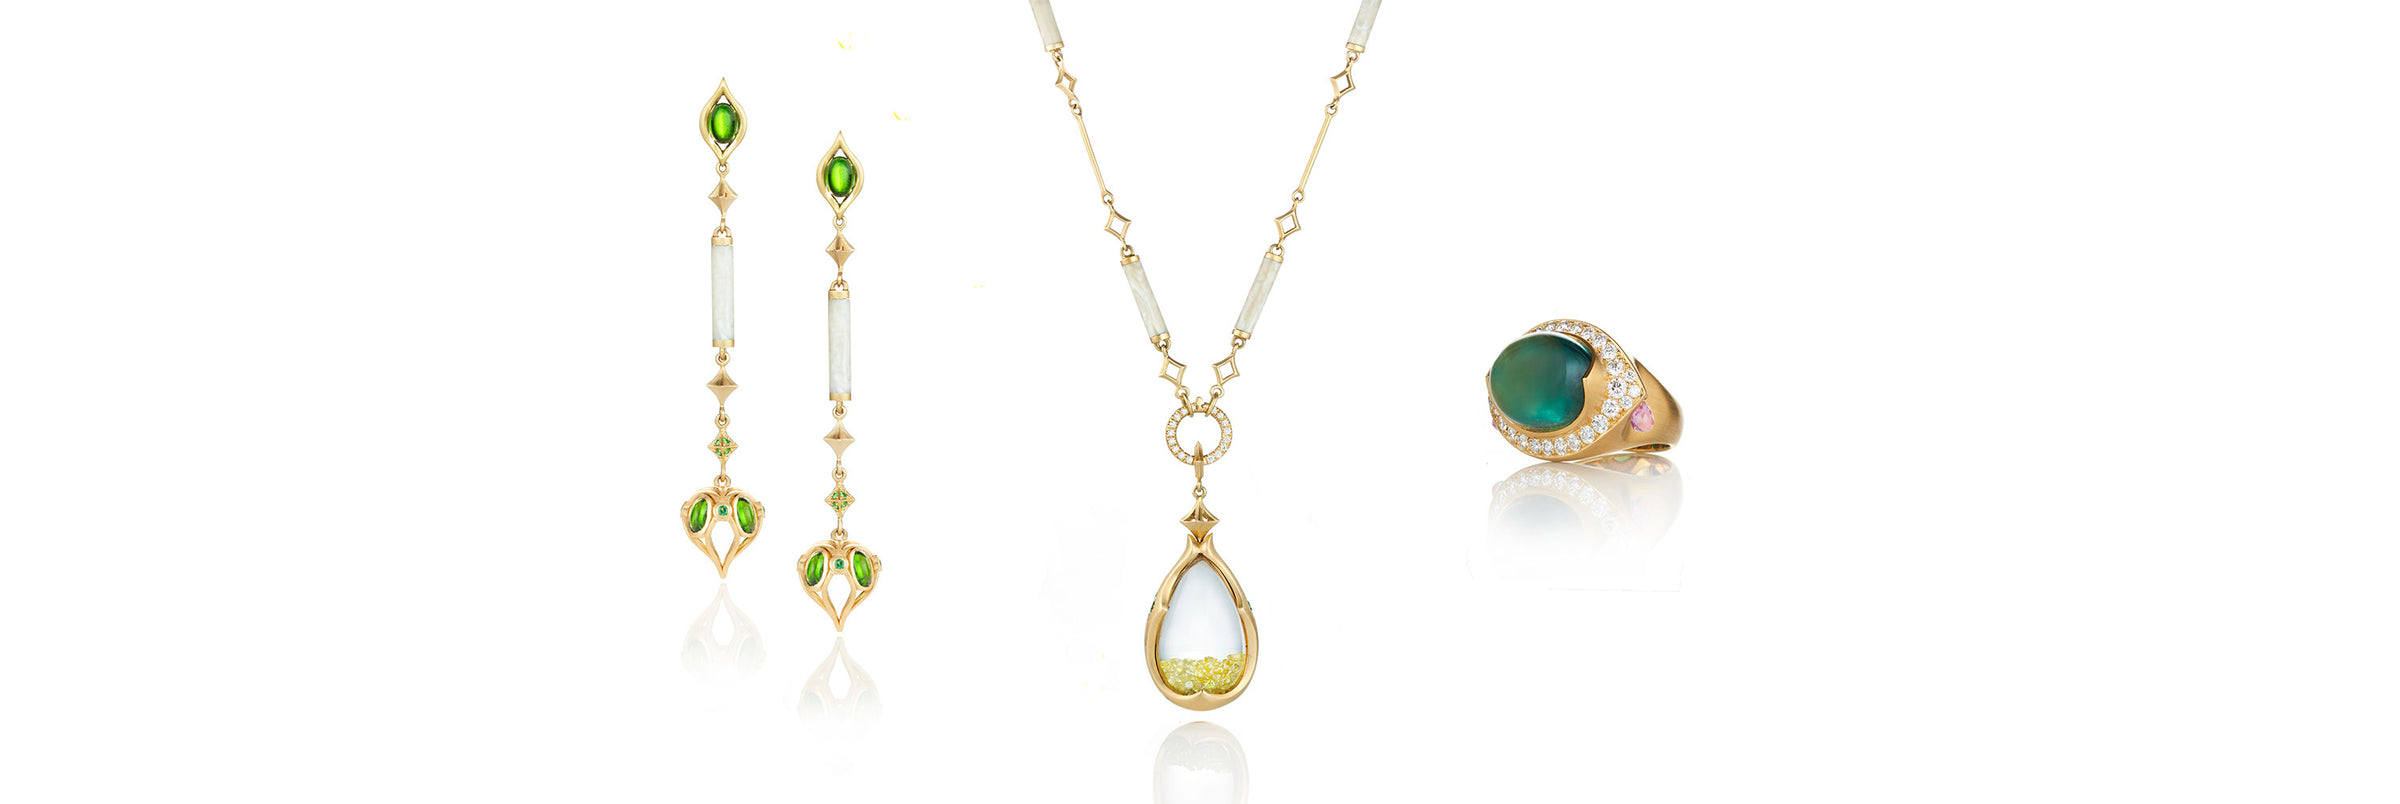 Artemesia earrings, pendant, ring